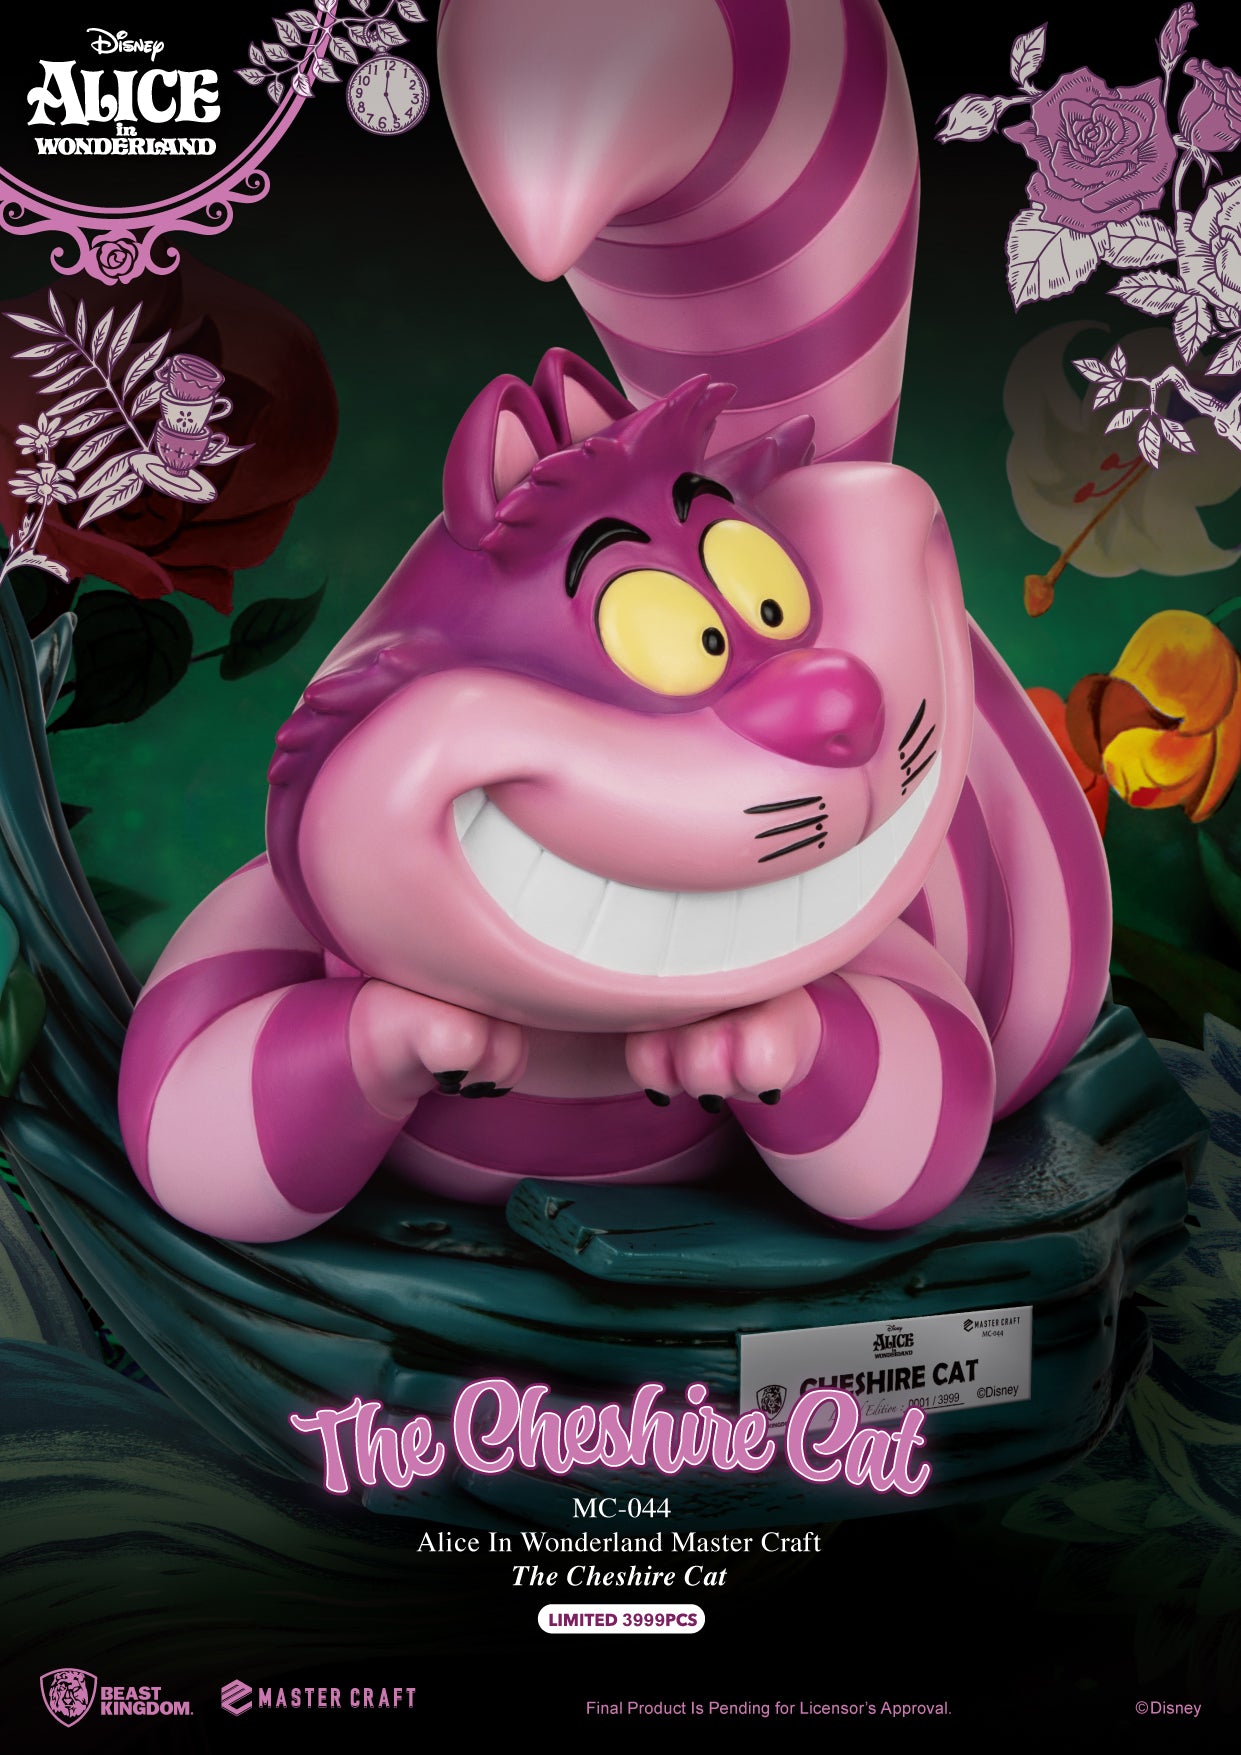 MC-044 Alice In Wonderland Cheshire Cat Mastercraft Statue